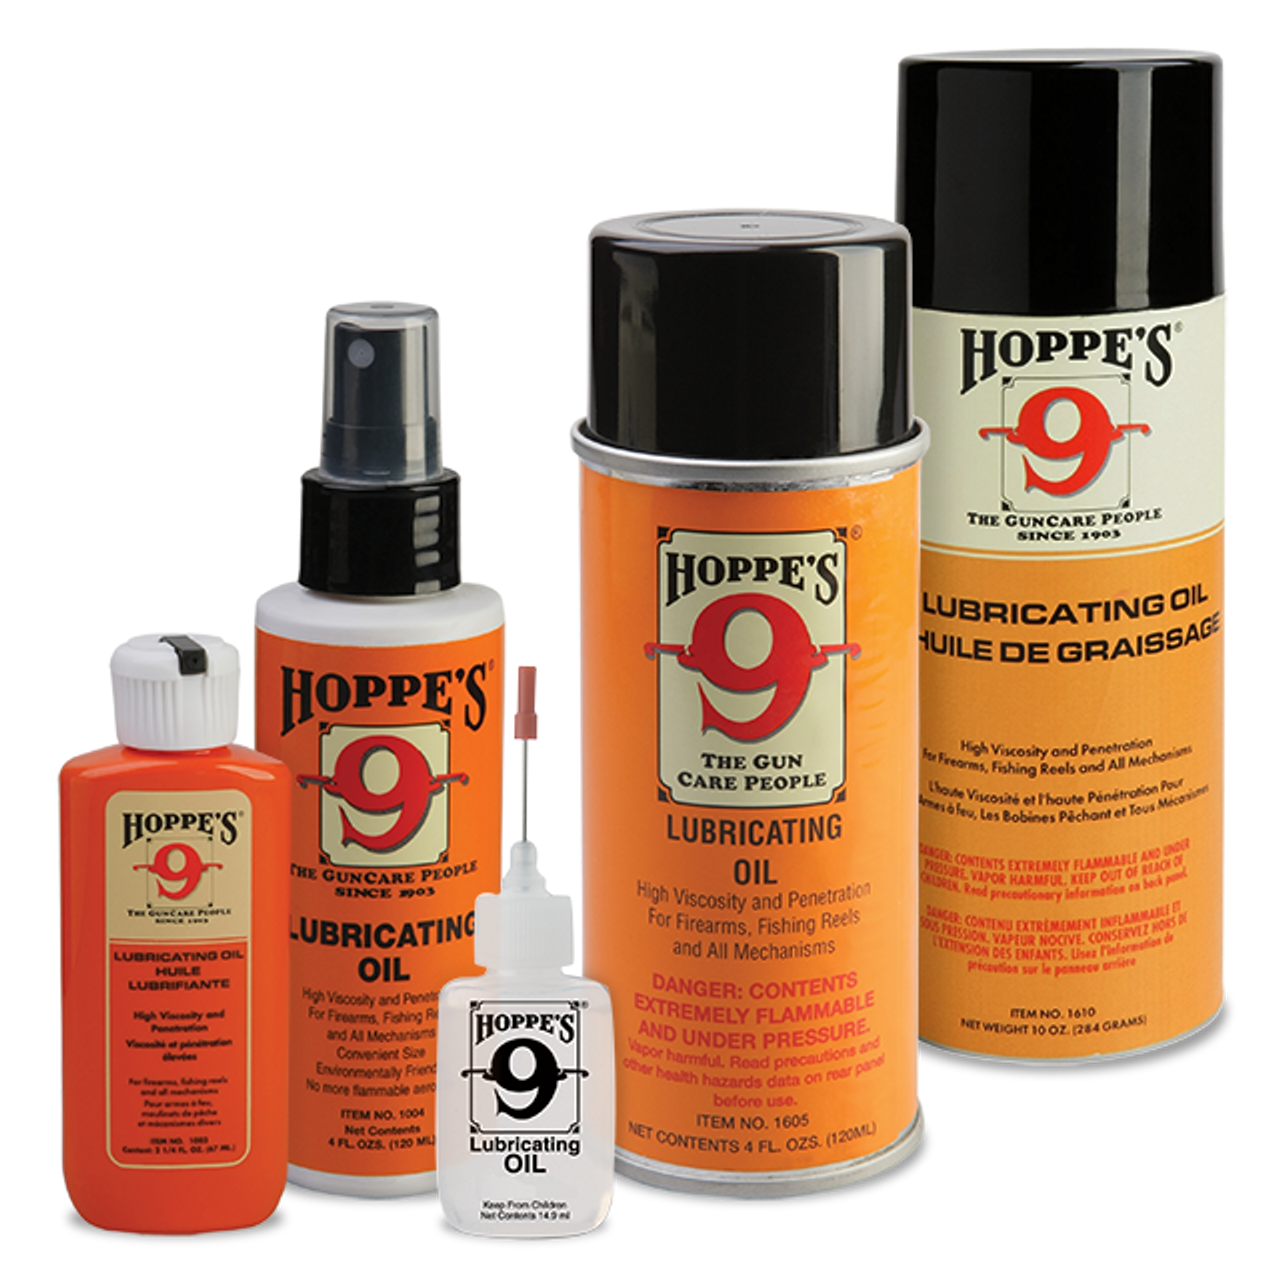 Hoppes 9 Lubricating Oil